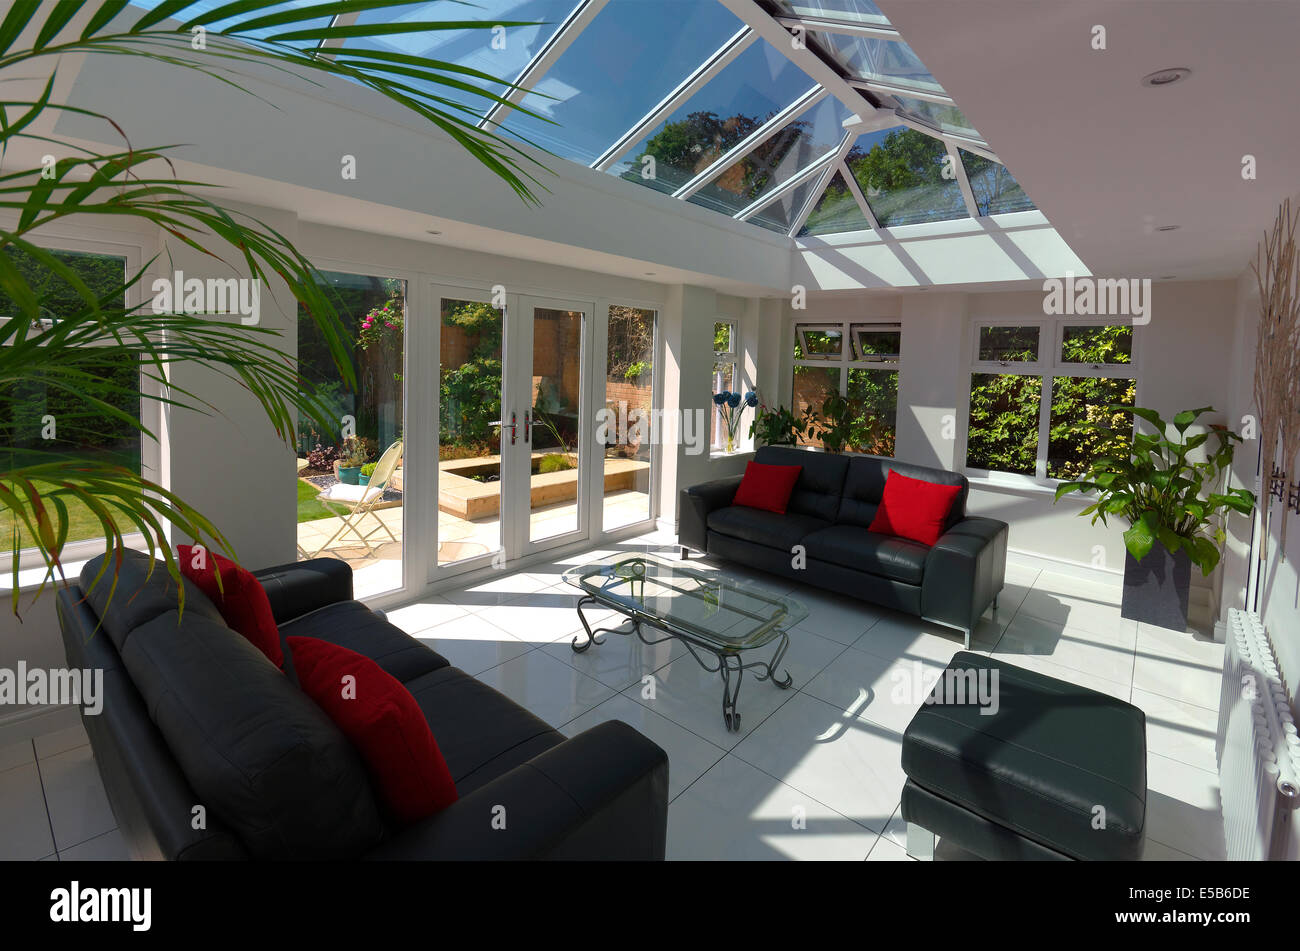 Orangery conservatorio estilo interior home improvement Foto de stock